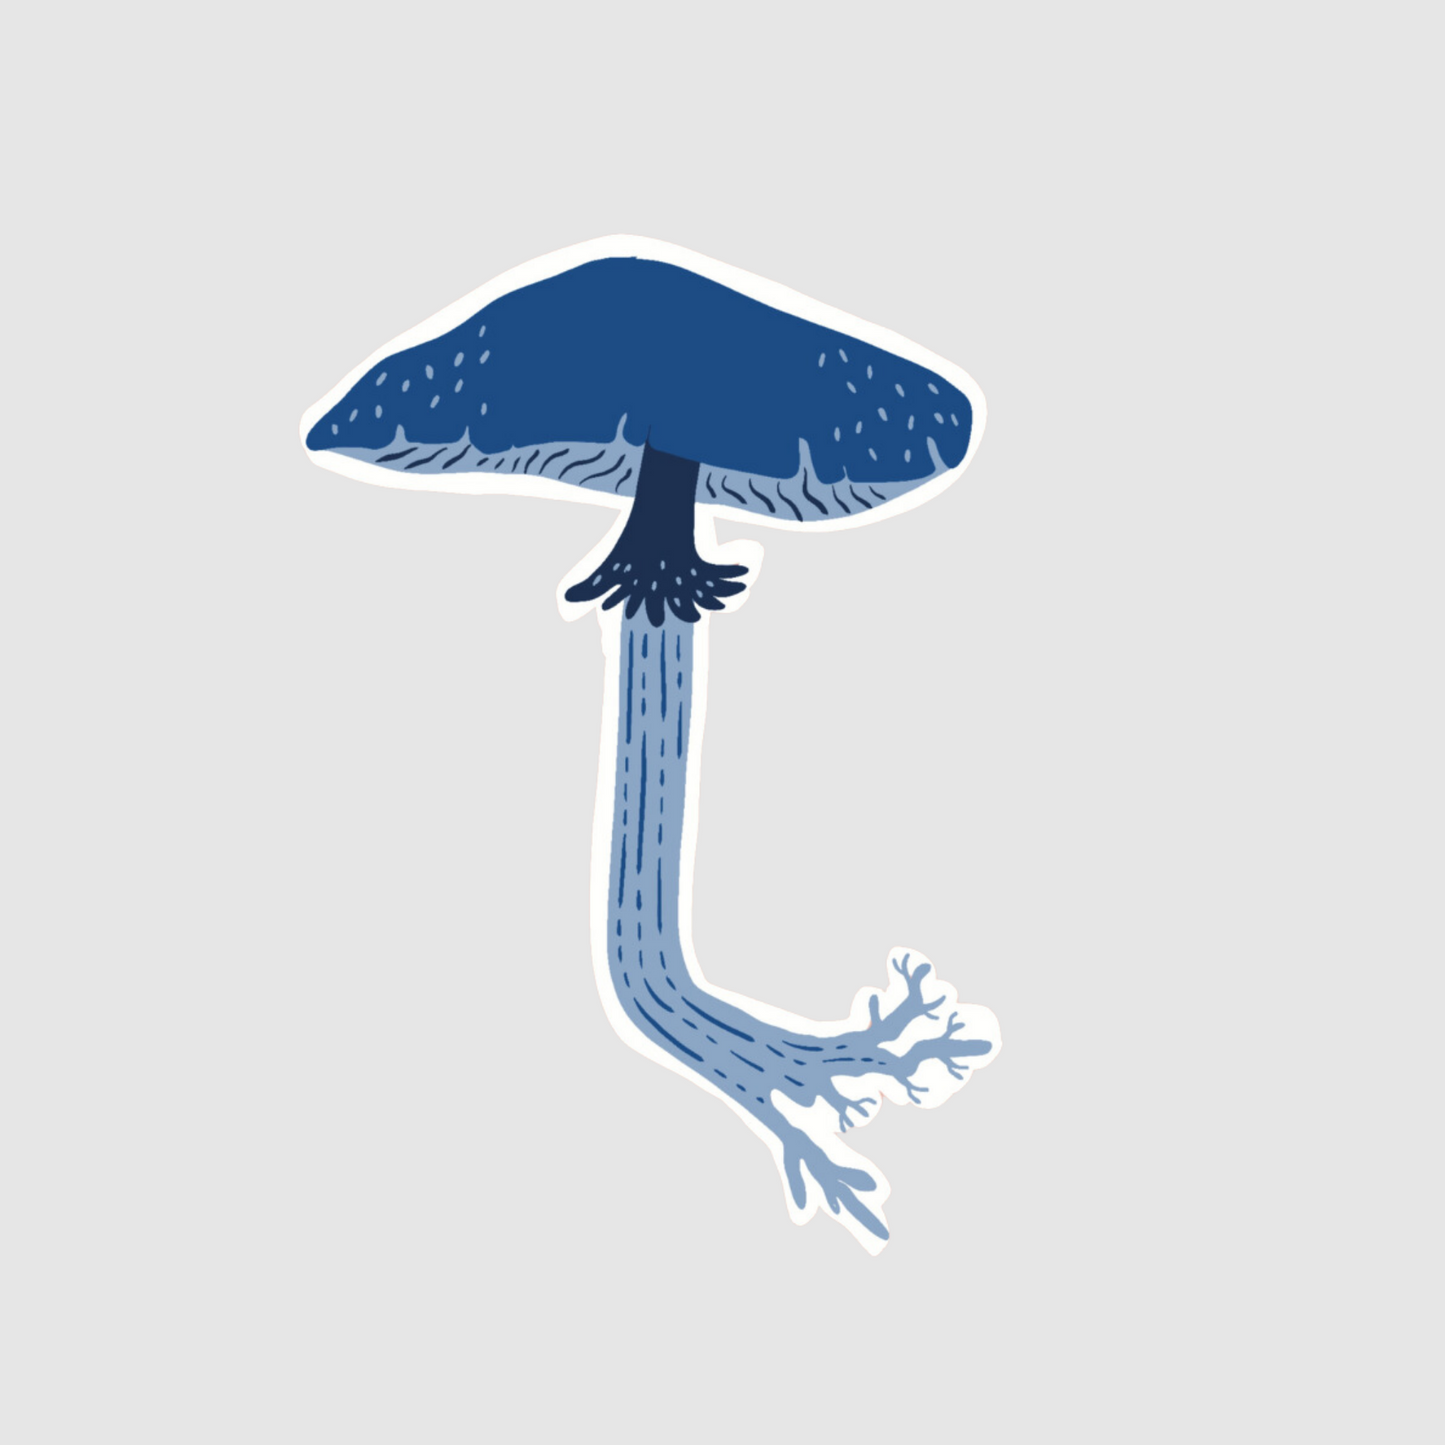 Fungi design - Enchanted Fungi sticker